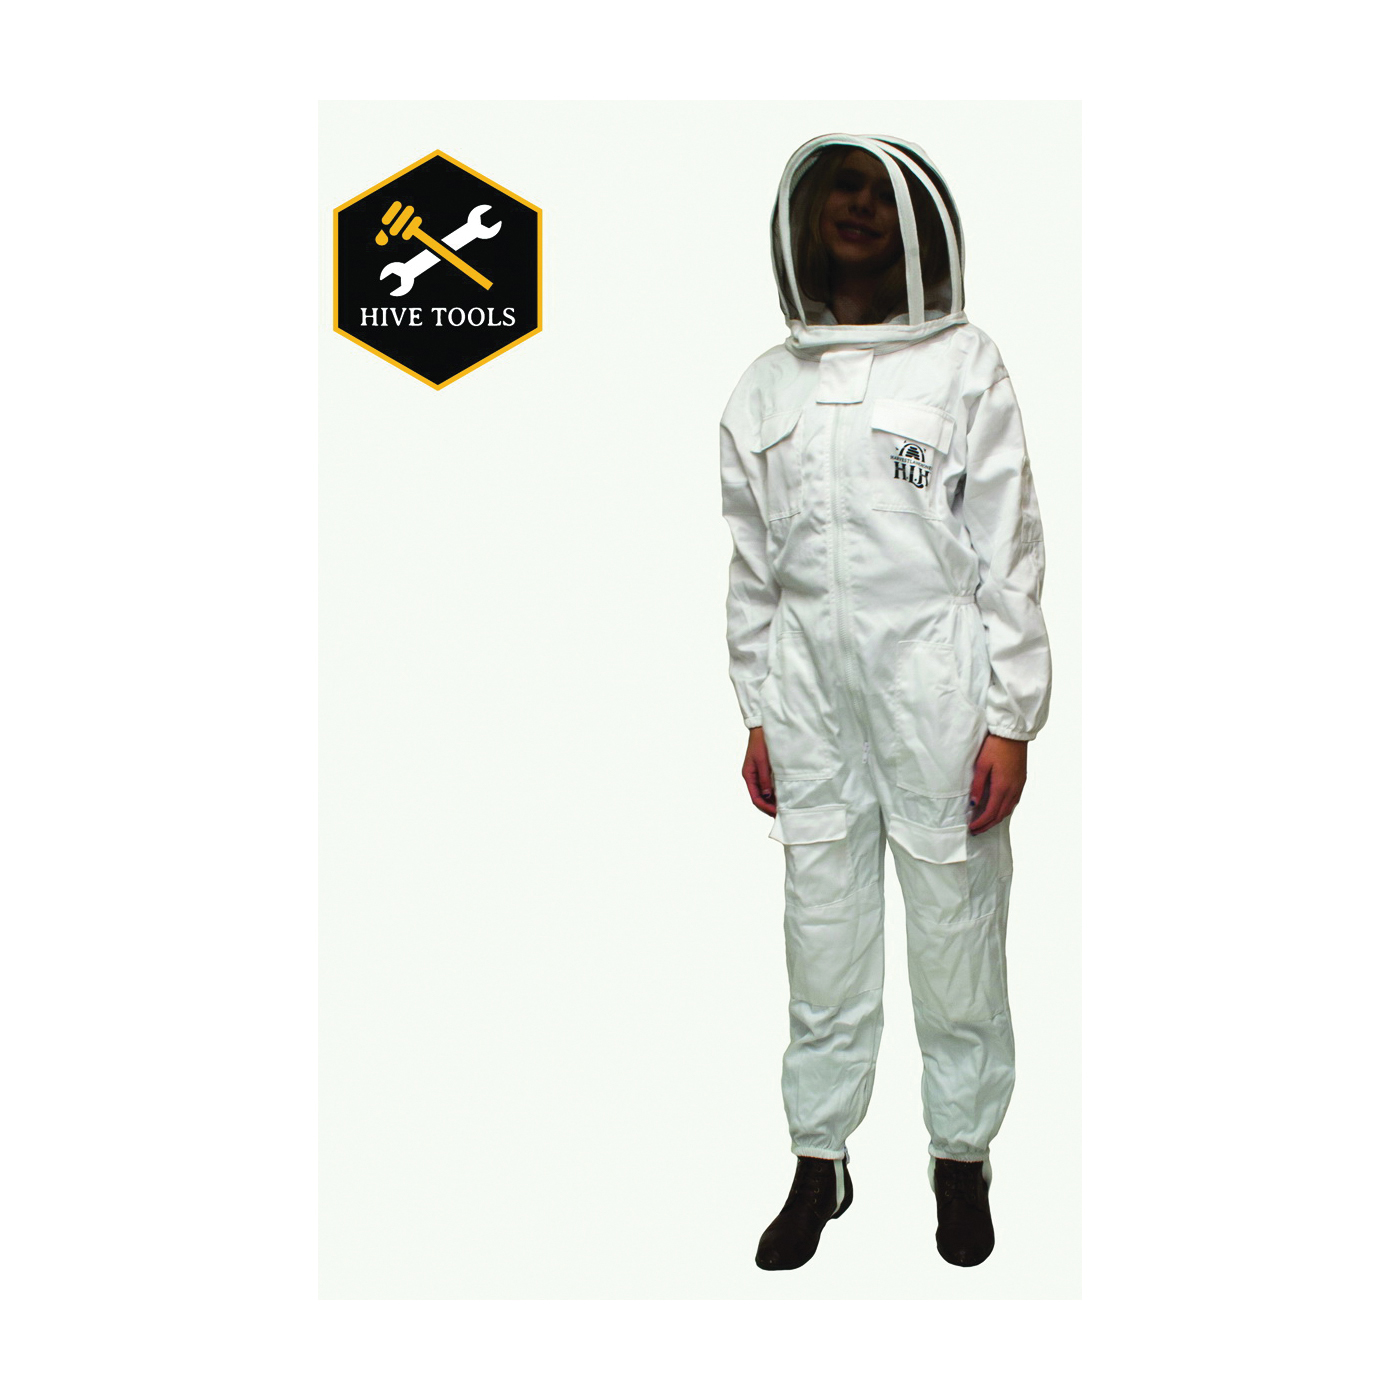 CLOTHSS-101 Beekeeping Suit, S, Zipper Closure, Polycotton